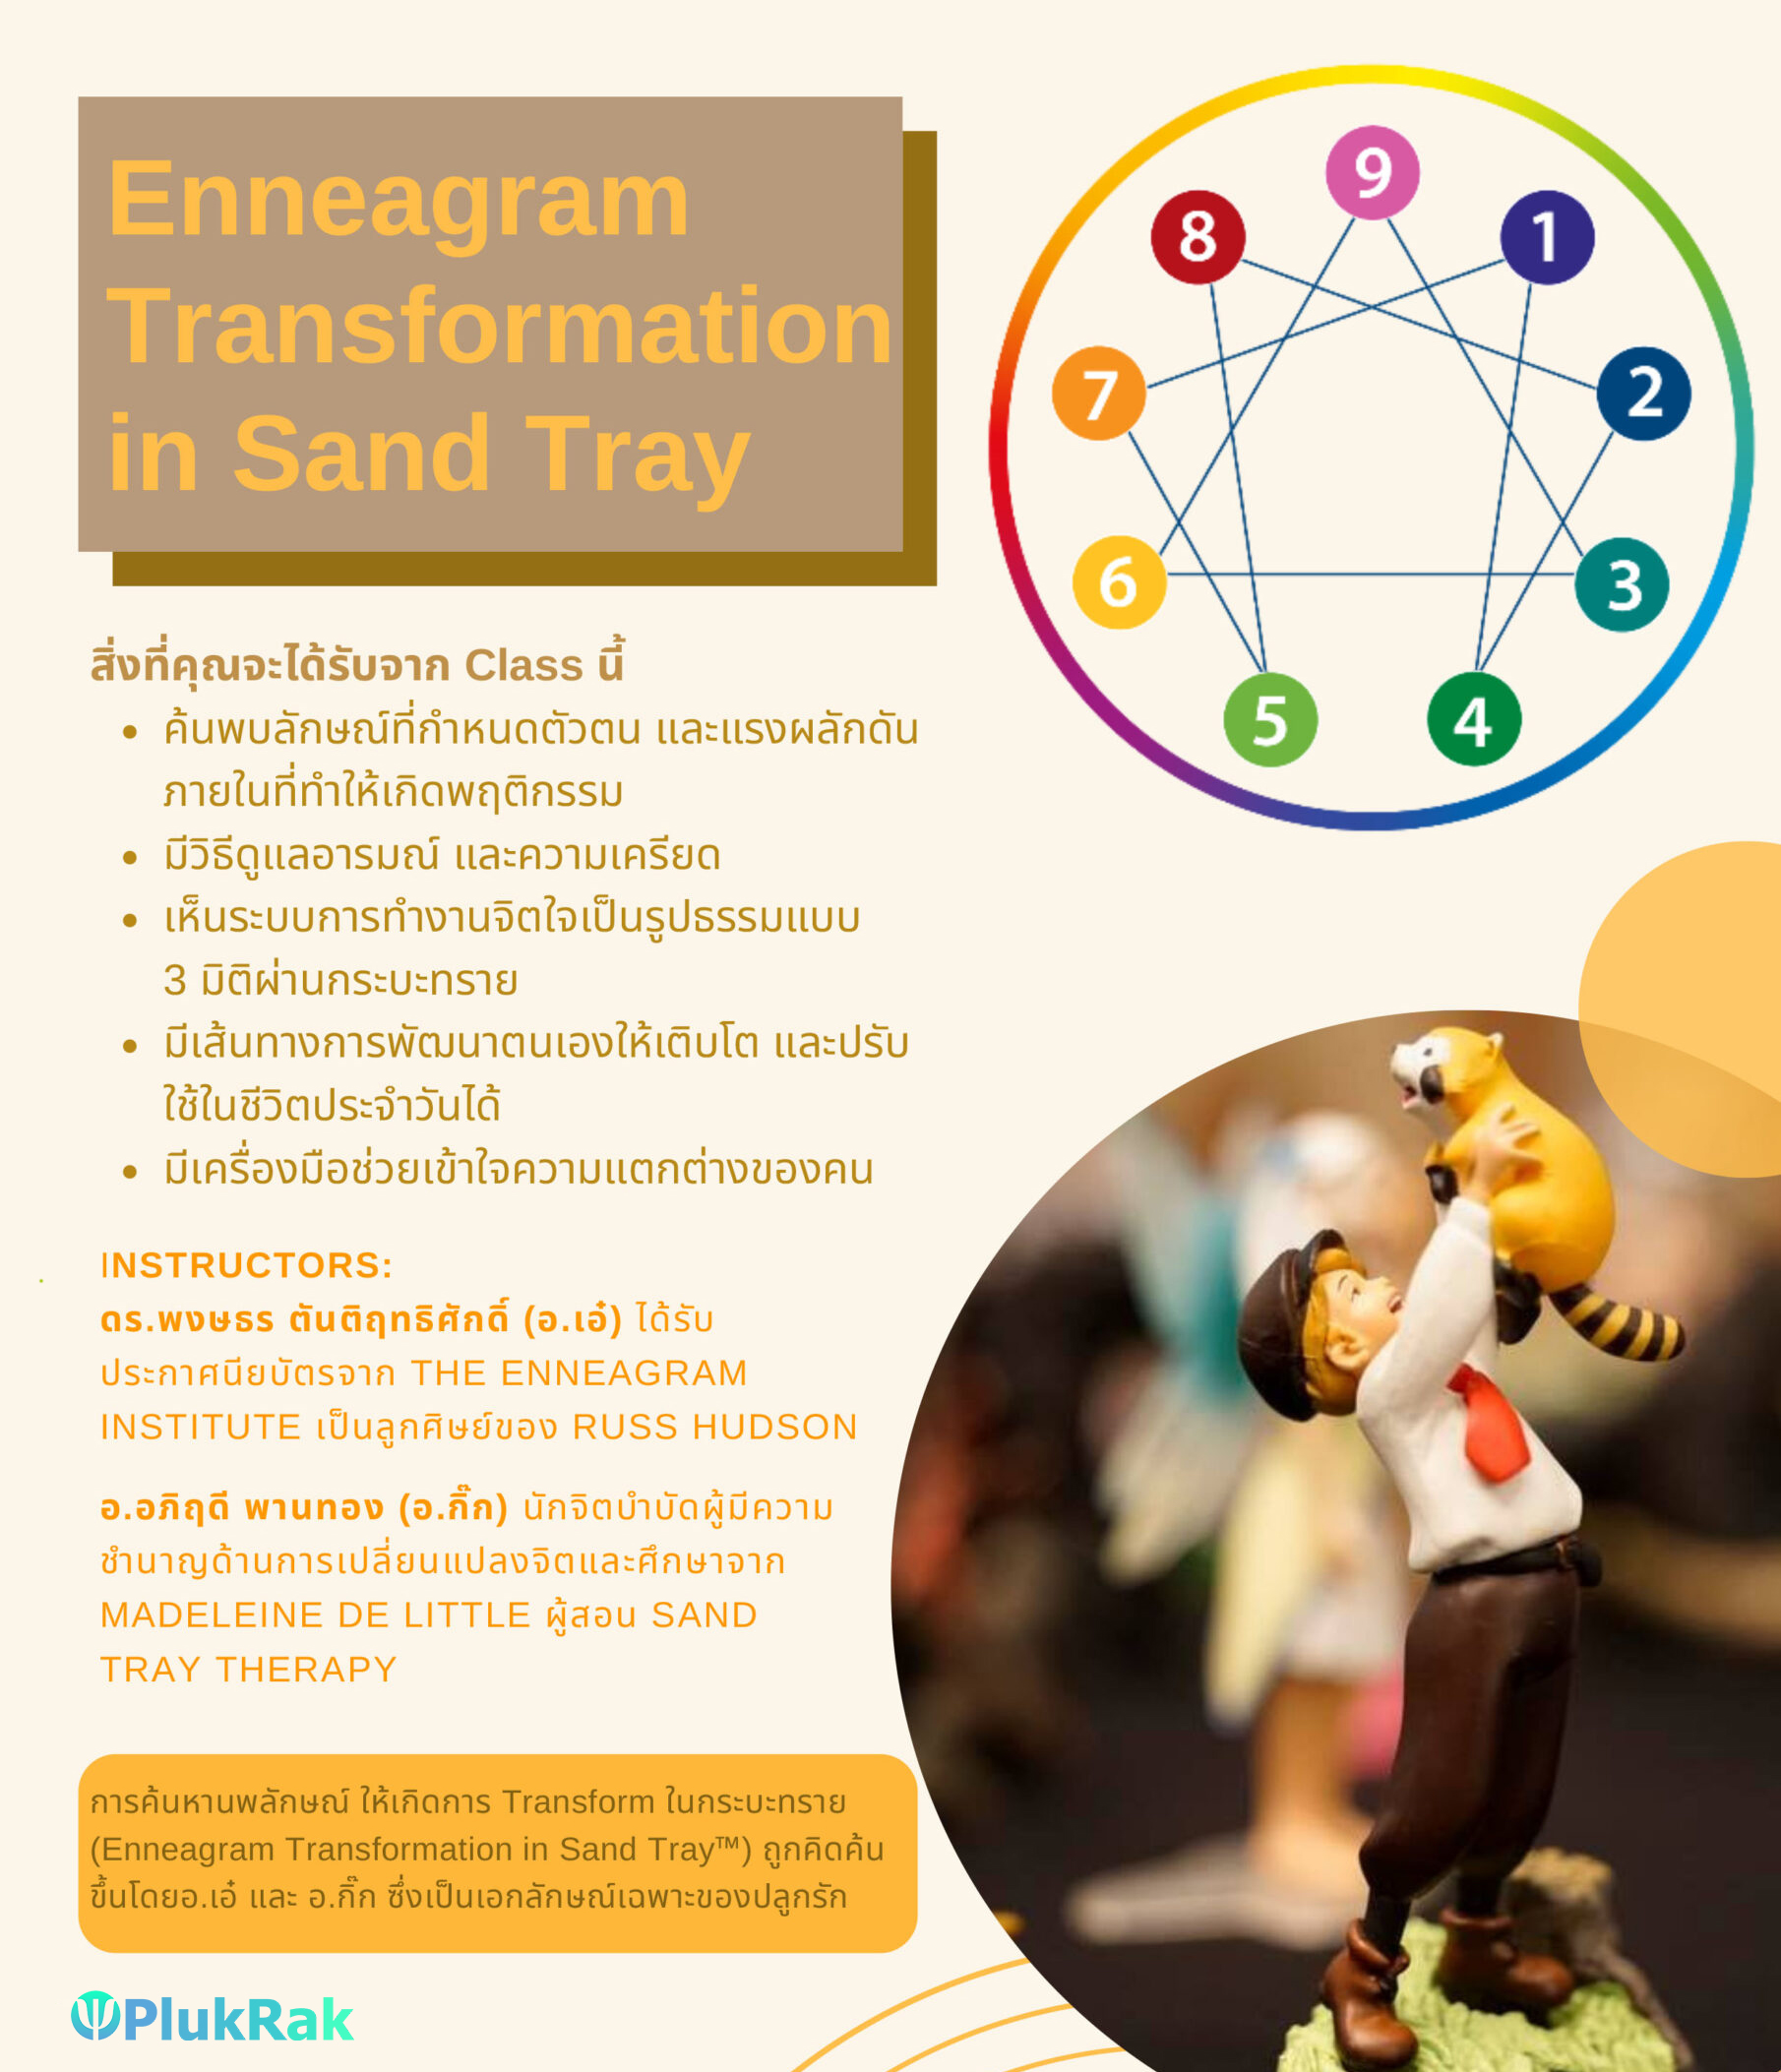 Enneagram Transformation in Sand Tray